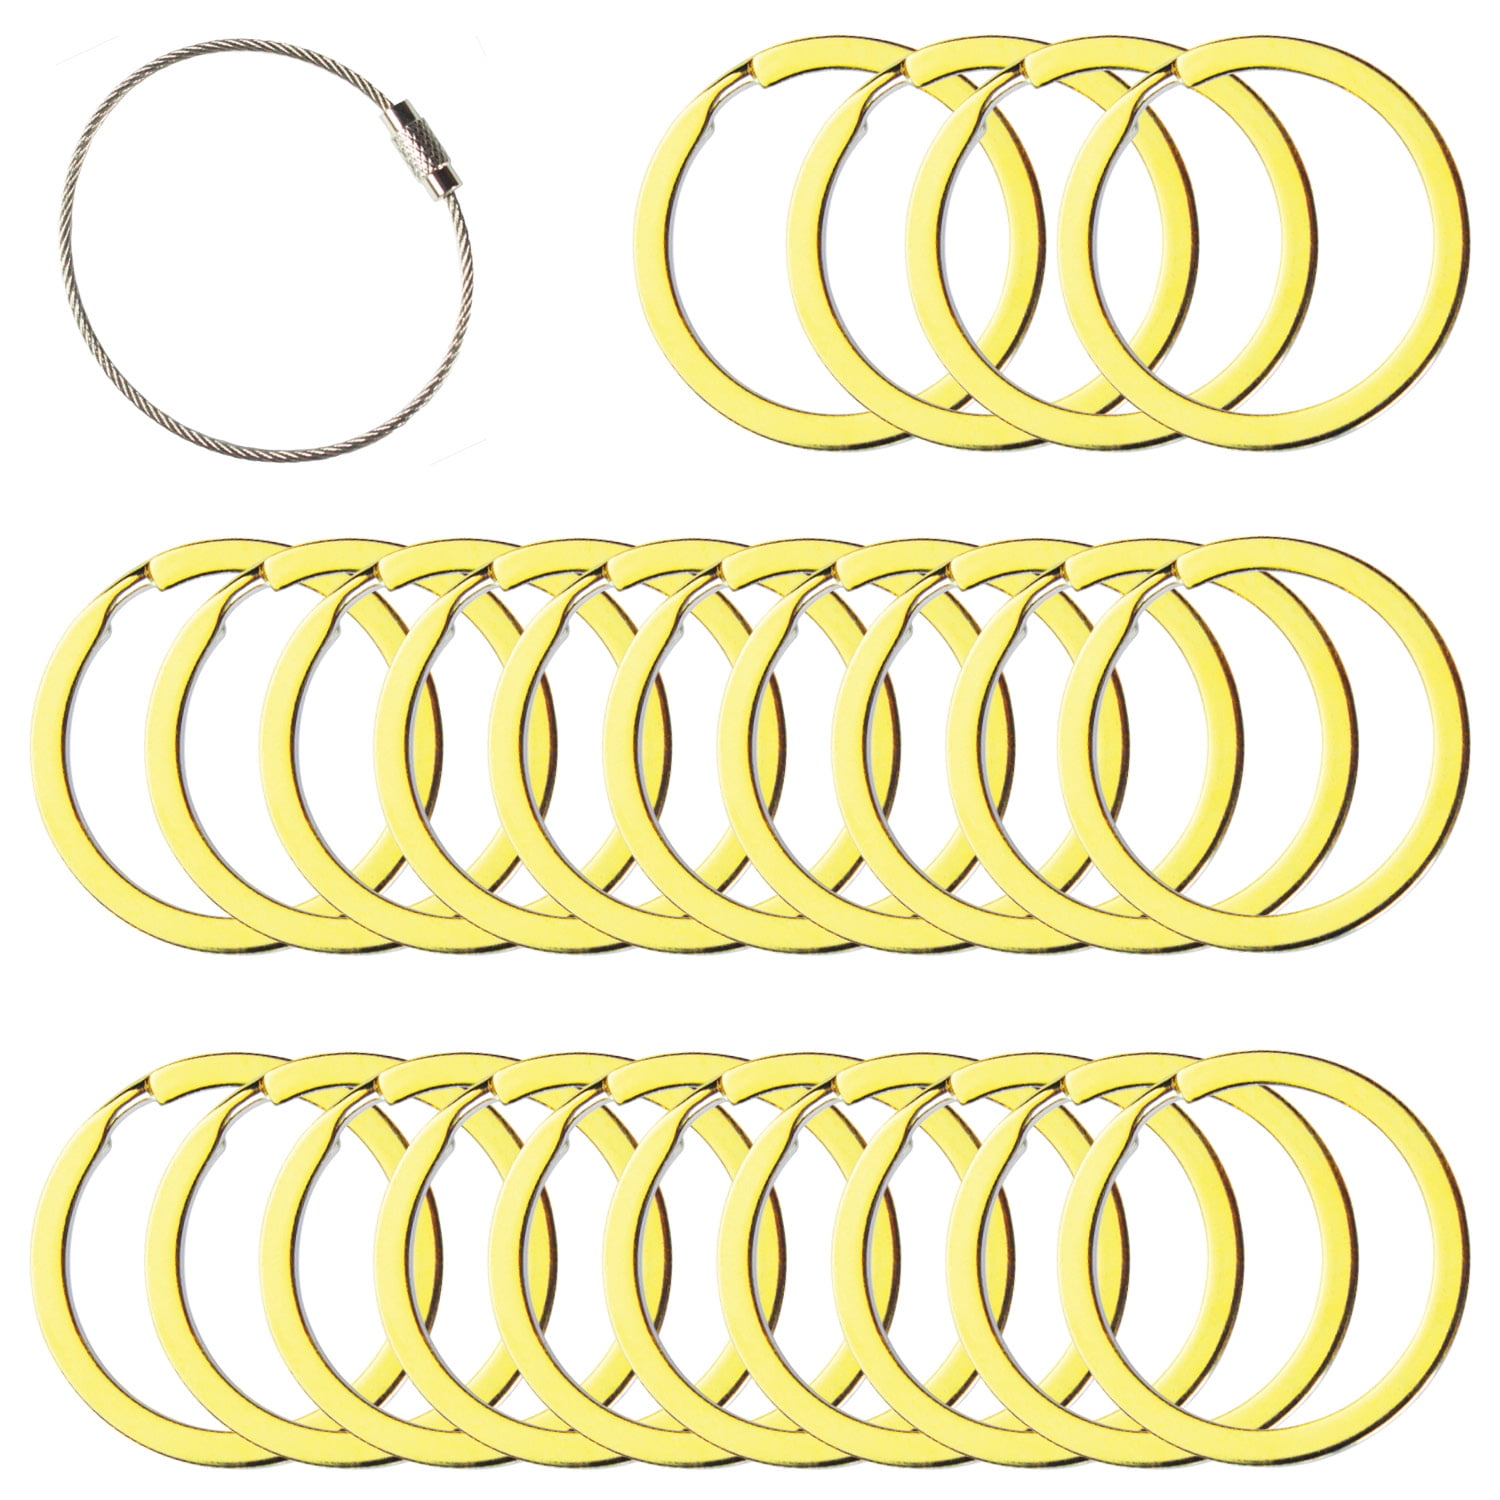 Flat Key Rings Key Chain Metal Split Ring 40pcs (Round 1 Inch Diameter),  for Home Car Keys Organization, Arts & Crafts, Lanyards, Lead Free Colored  (Gold) 